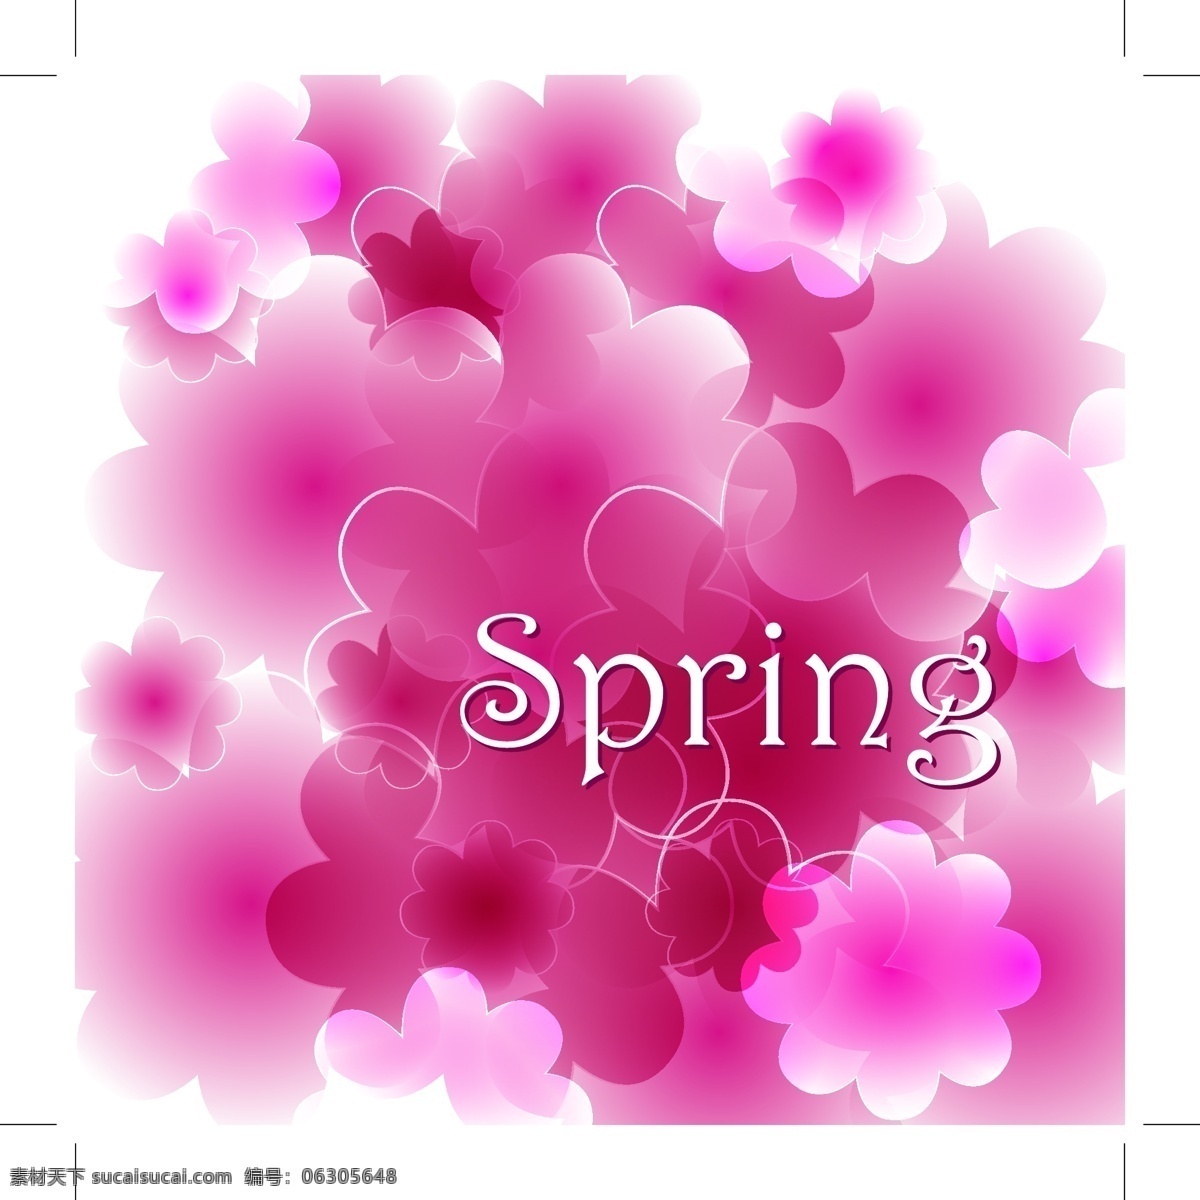 spring 春天 概念 背景 矢量 花朵 绿叶 树叶 线条 叶子 圆点 矢量图 其他矢量图